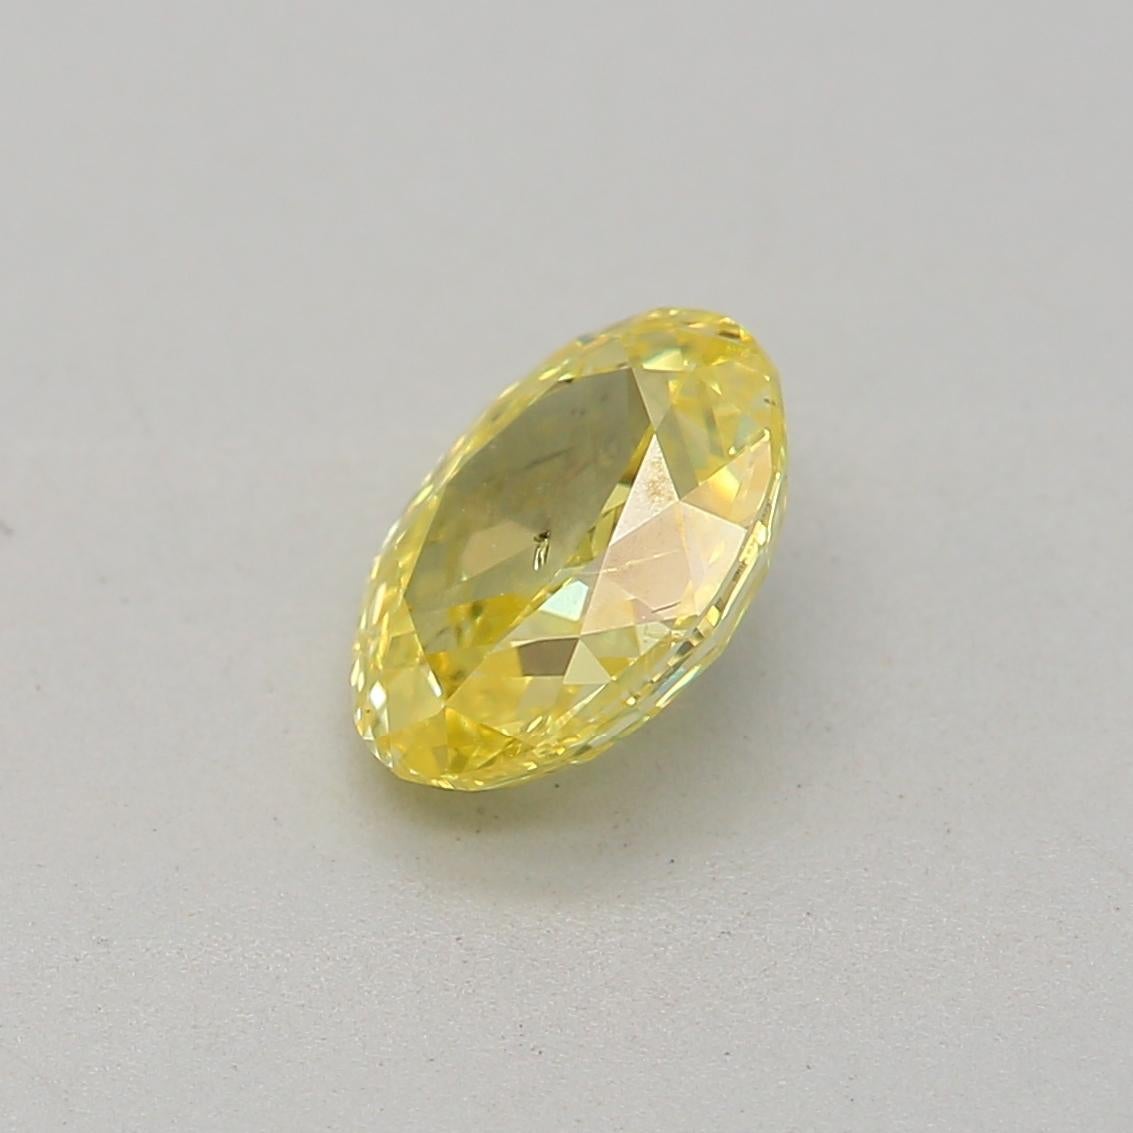 Oval Cut 0.53 Carat Fancy Intense Yellow Oval cut diamond SI2 Clarity GIA Certified For Sale